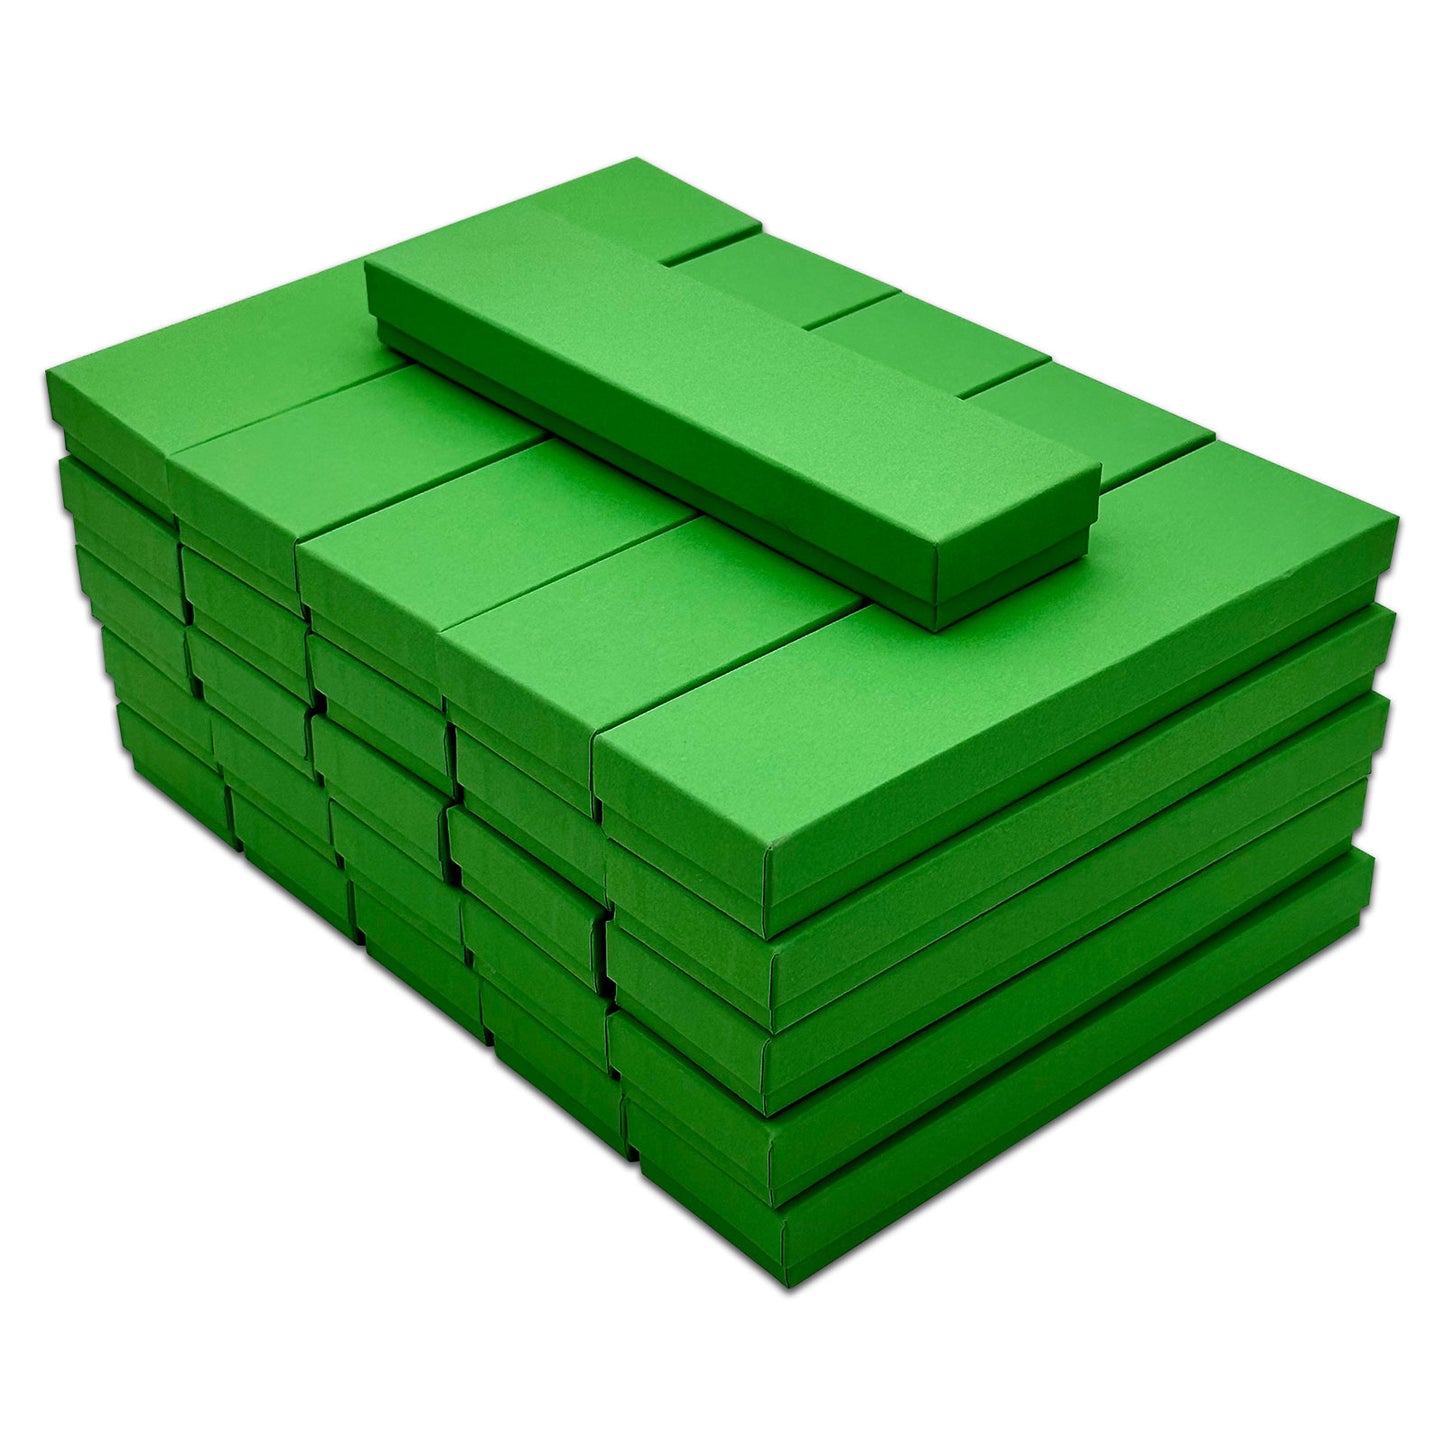 8" x 2" x 1" Light Green Cotton Filled Box (25-Pack)